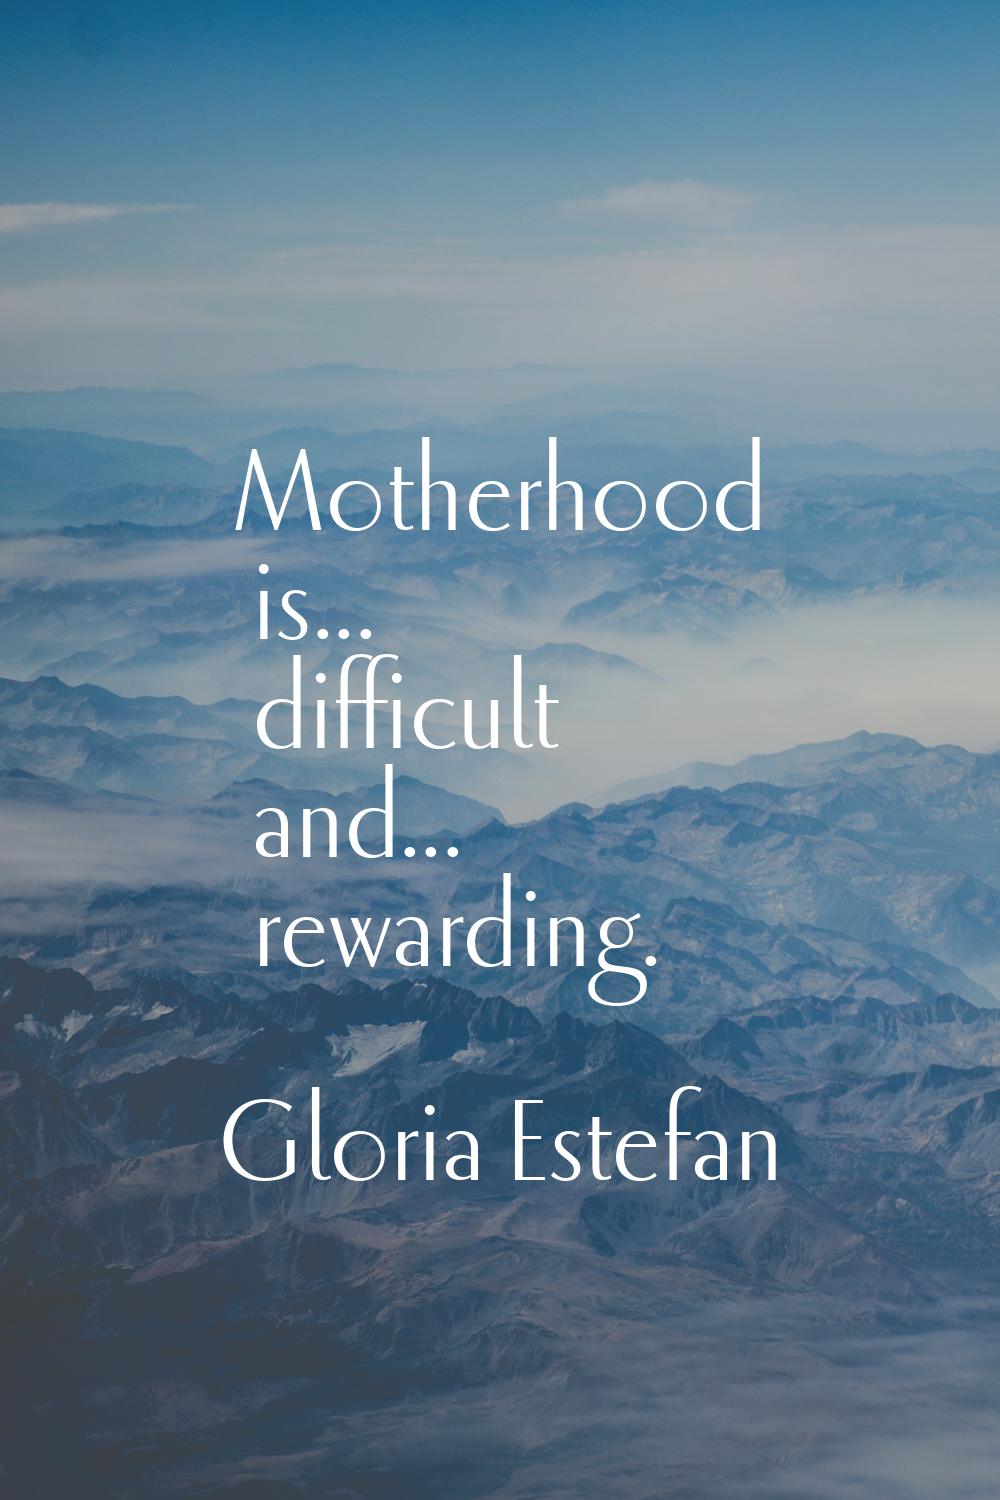 Motherhood is... difficult and... rewarding.